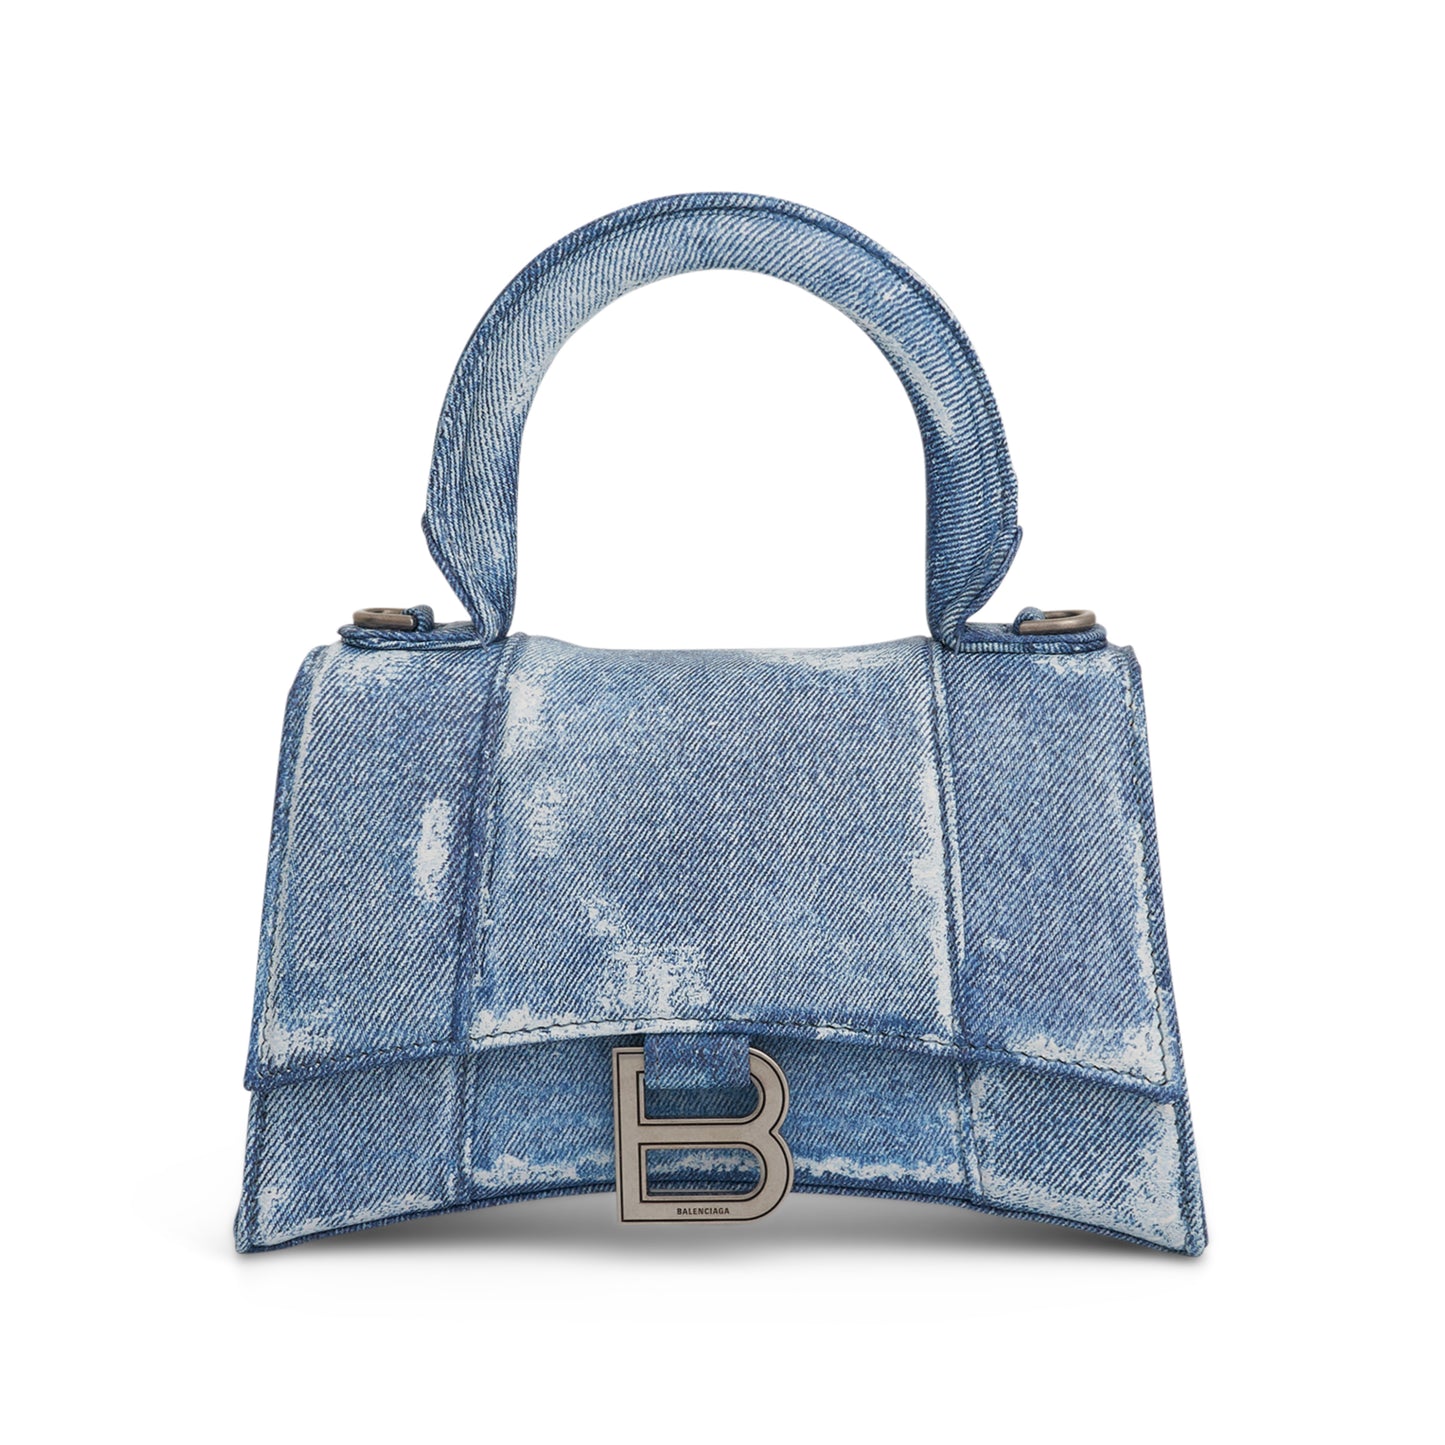 Hourglass XS Handbag in Denim Printed in Blue